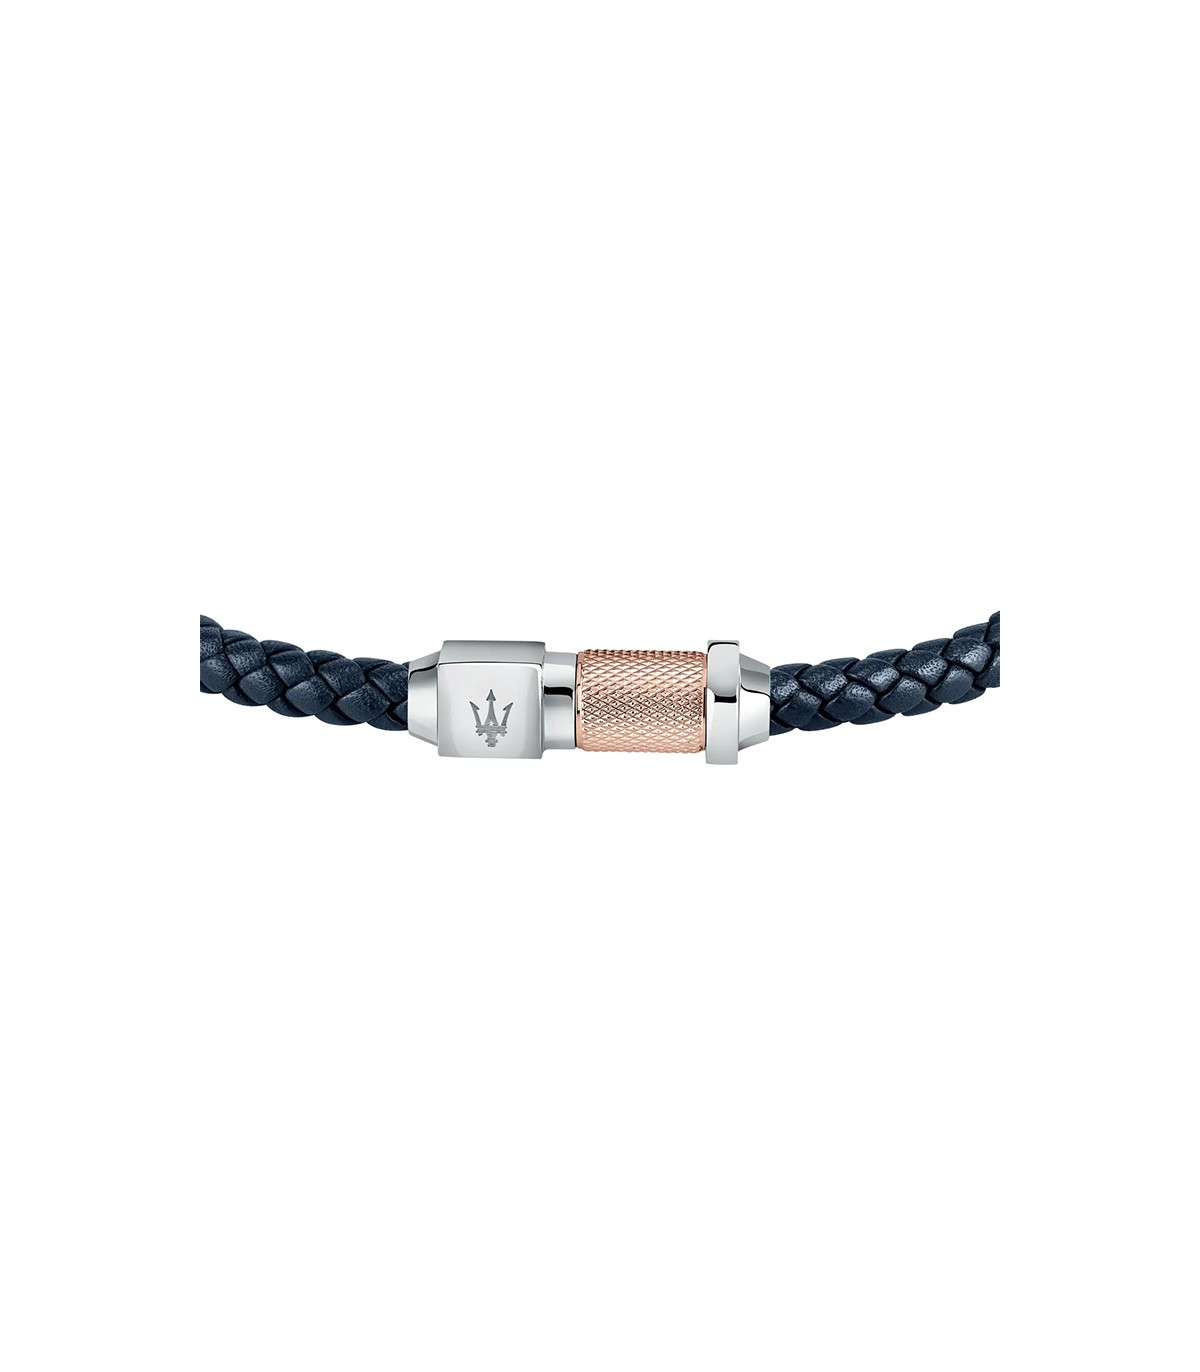 Maserati Bracelet - Jewels - Blue Leather-Steel Clasp-JM223AVE16